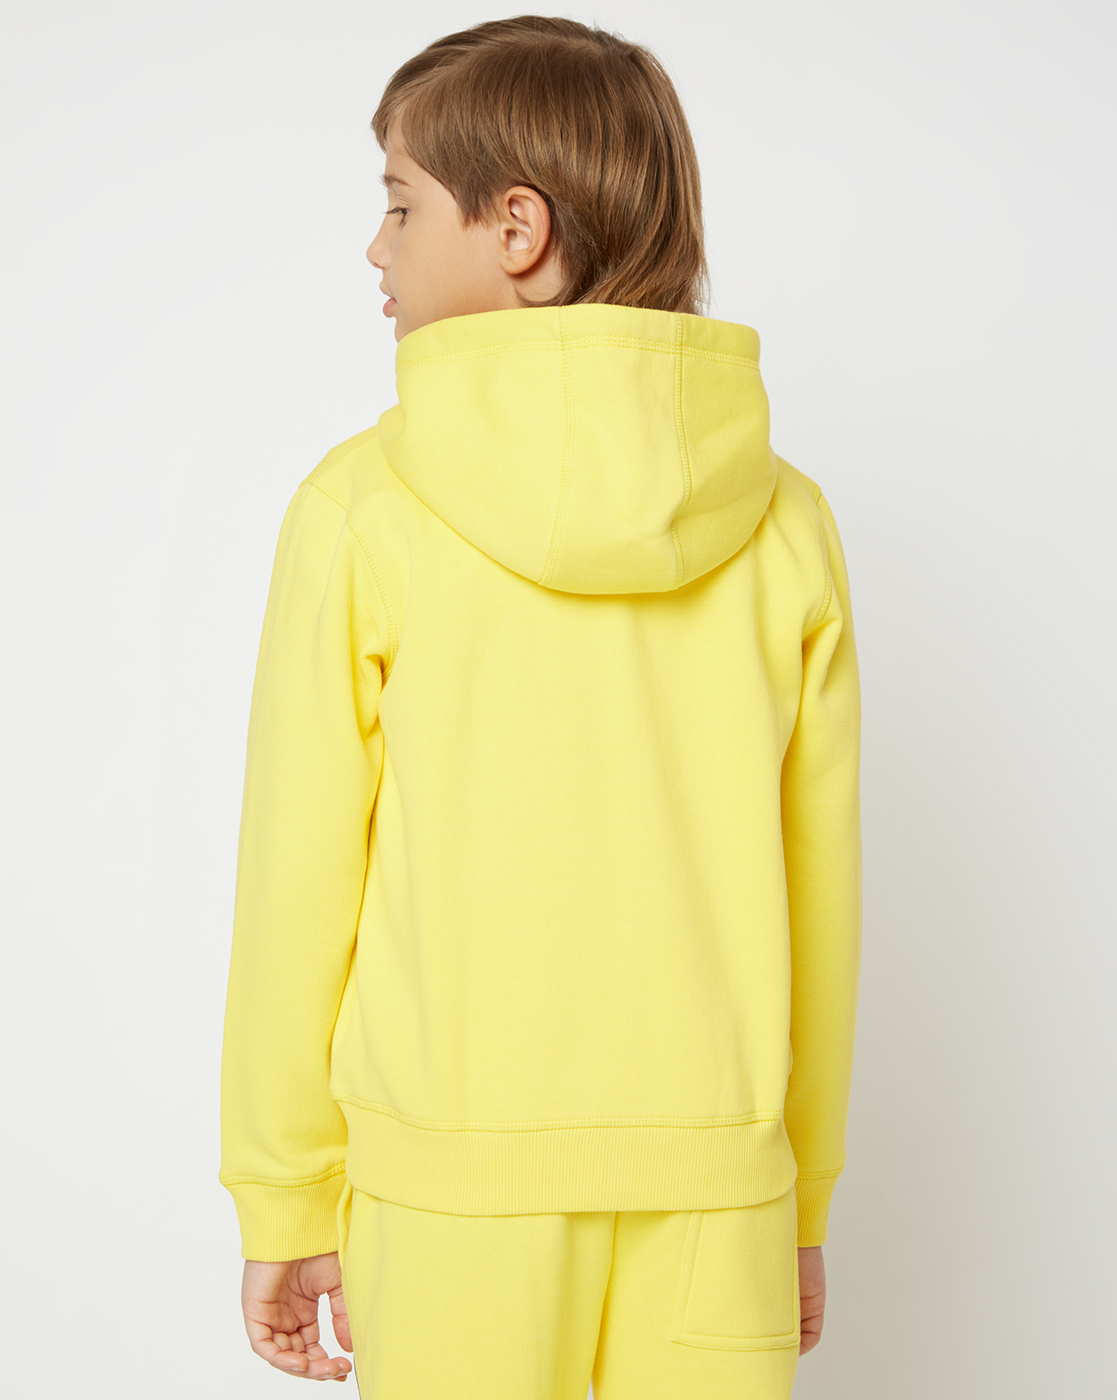 Gas Kids Boys Yellow Printed Sweatshirt